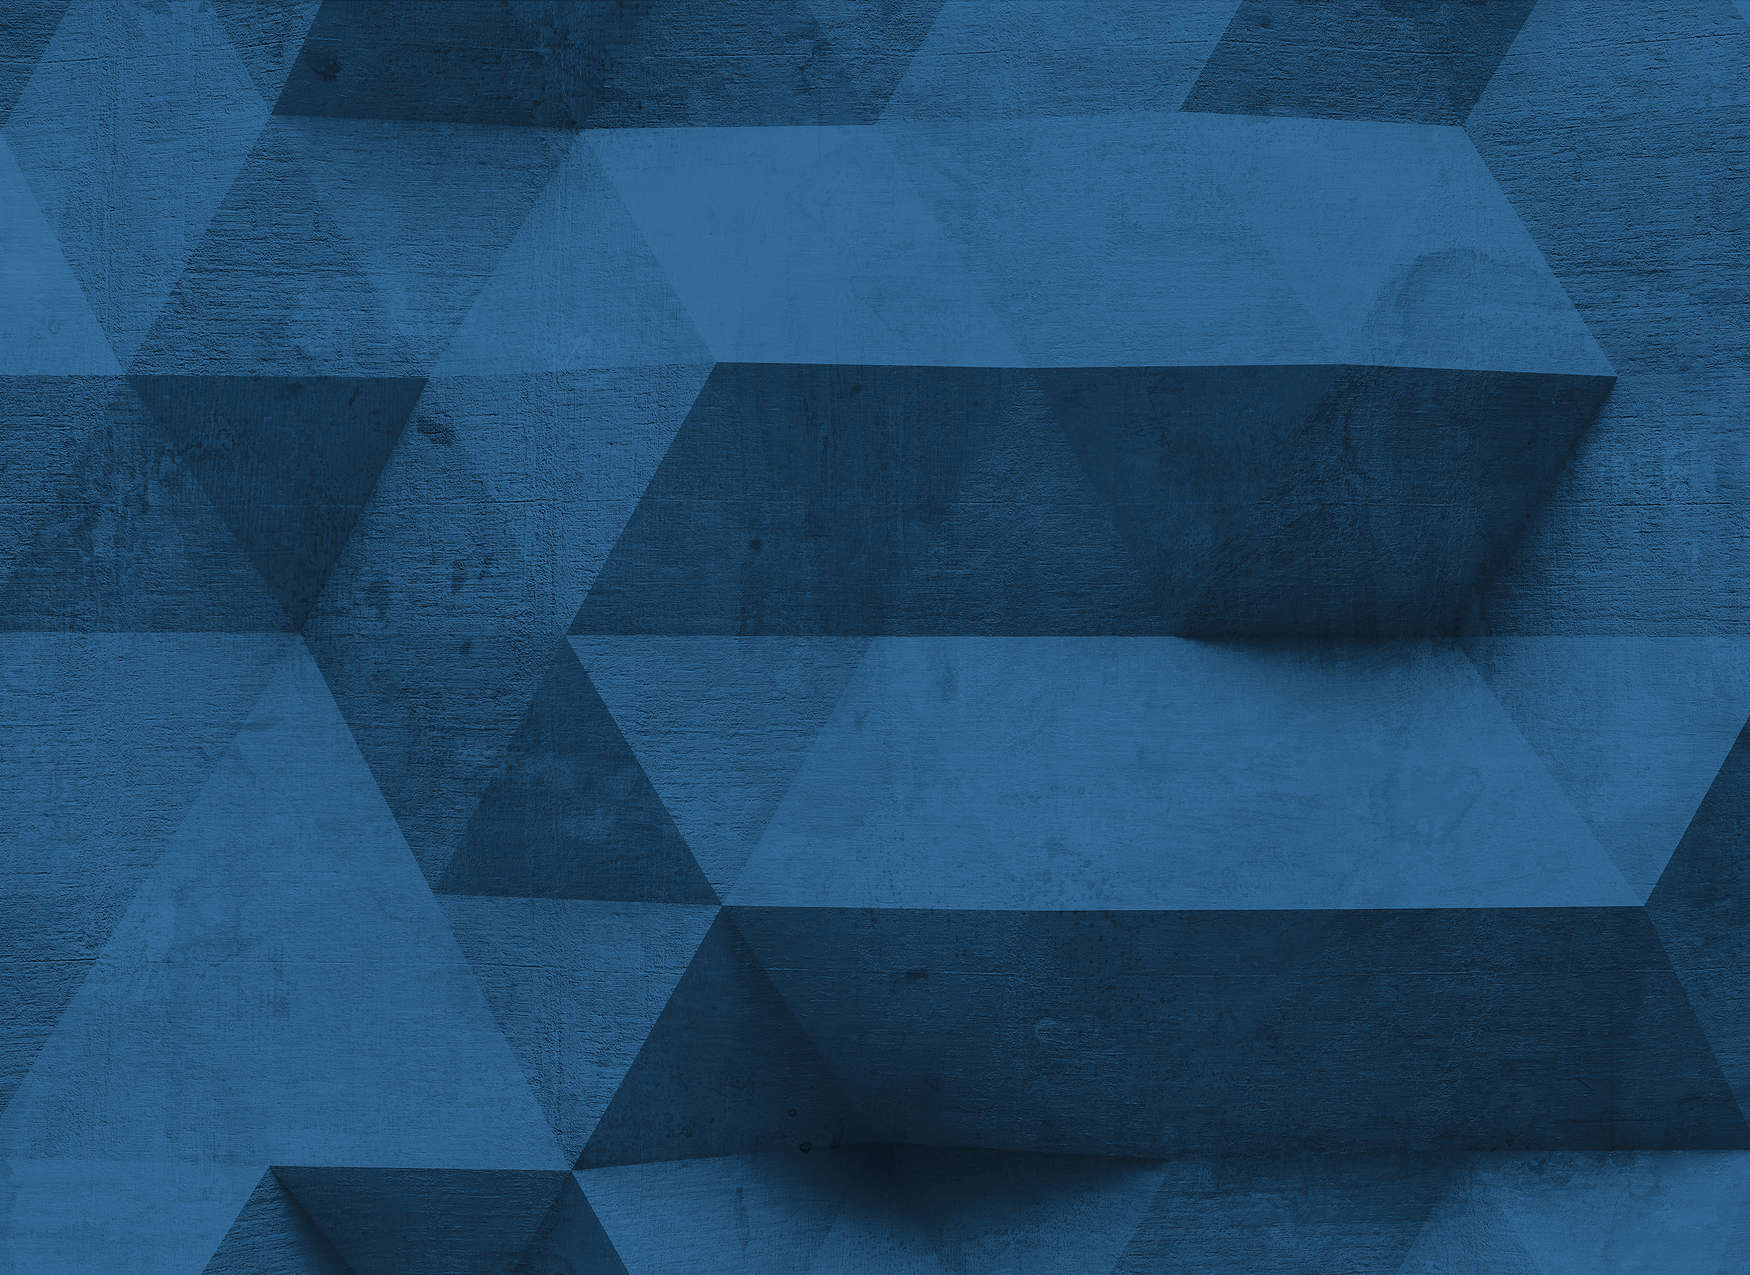             Betonwand mit 3D-Mustern Fototapete – Blau
        